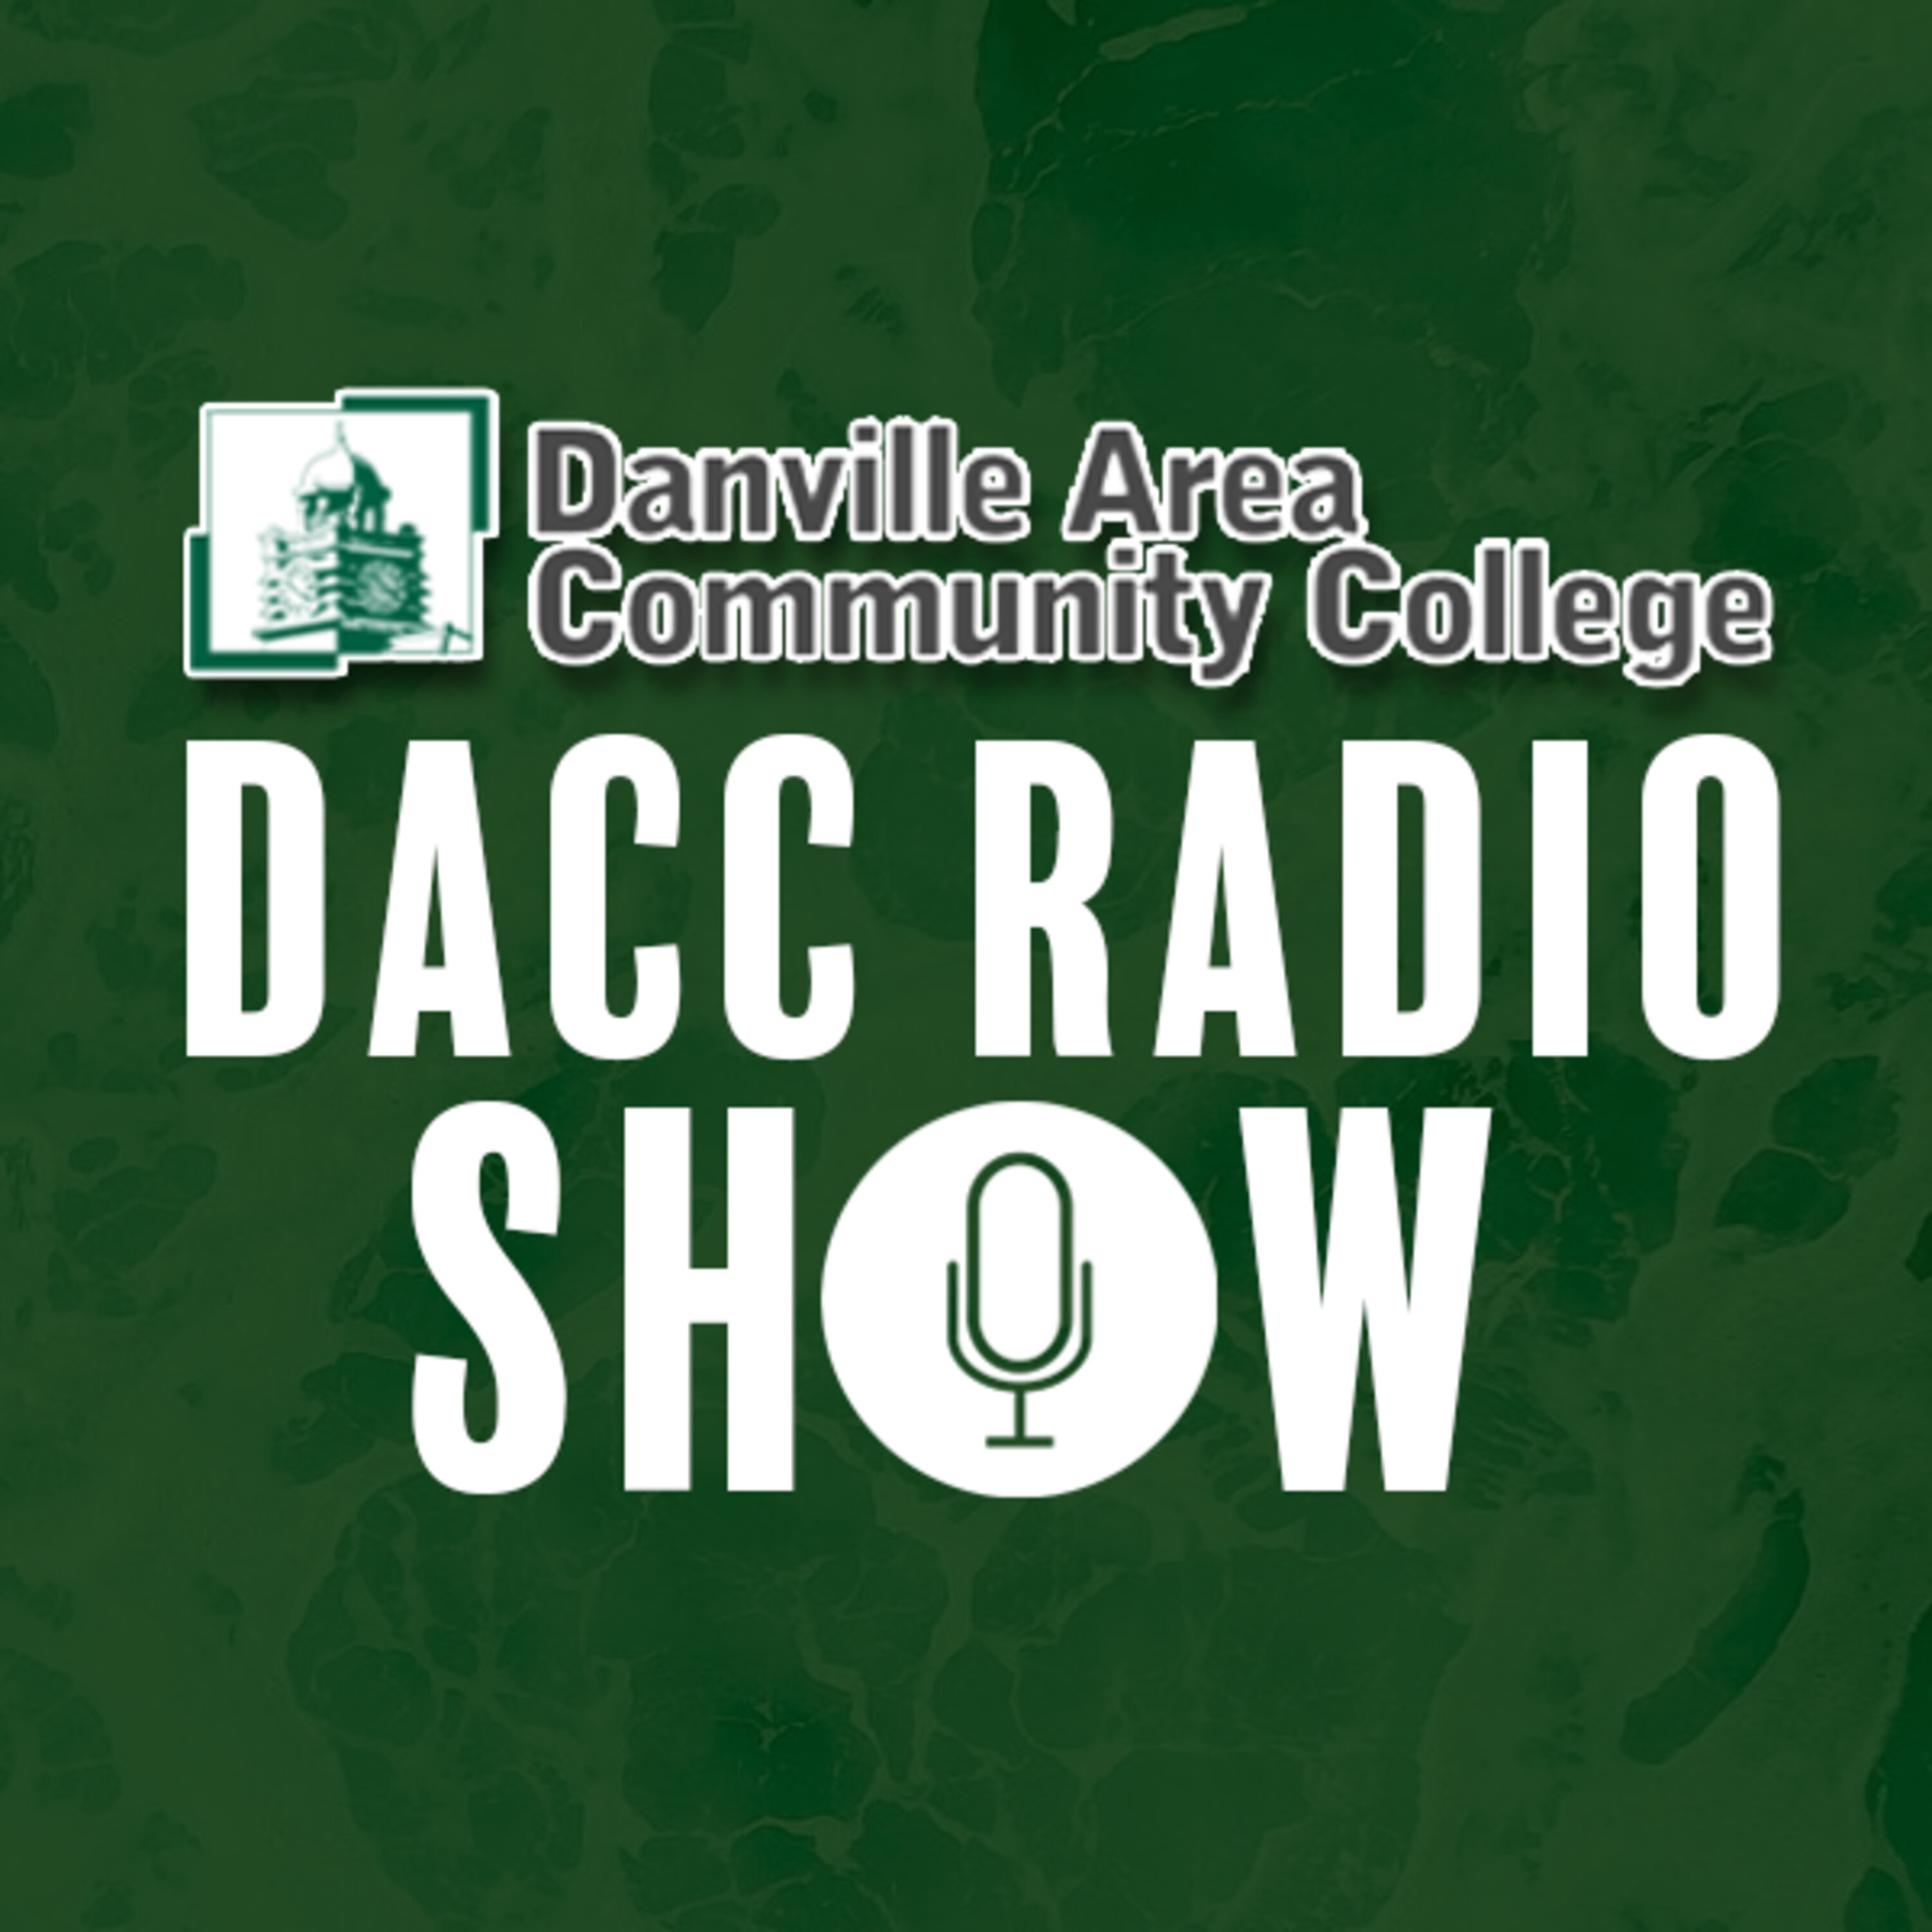 DACC Radio Show